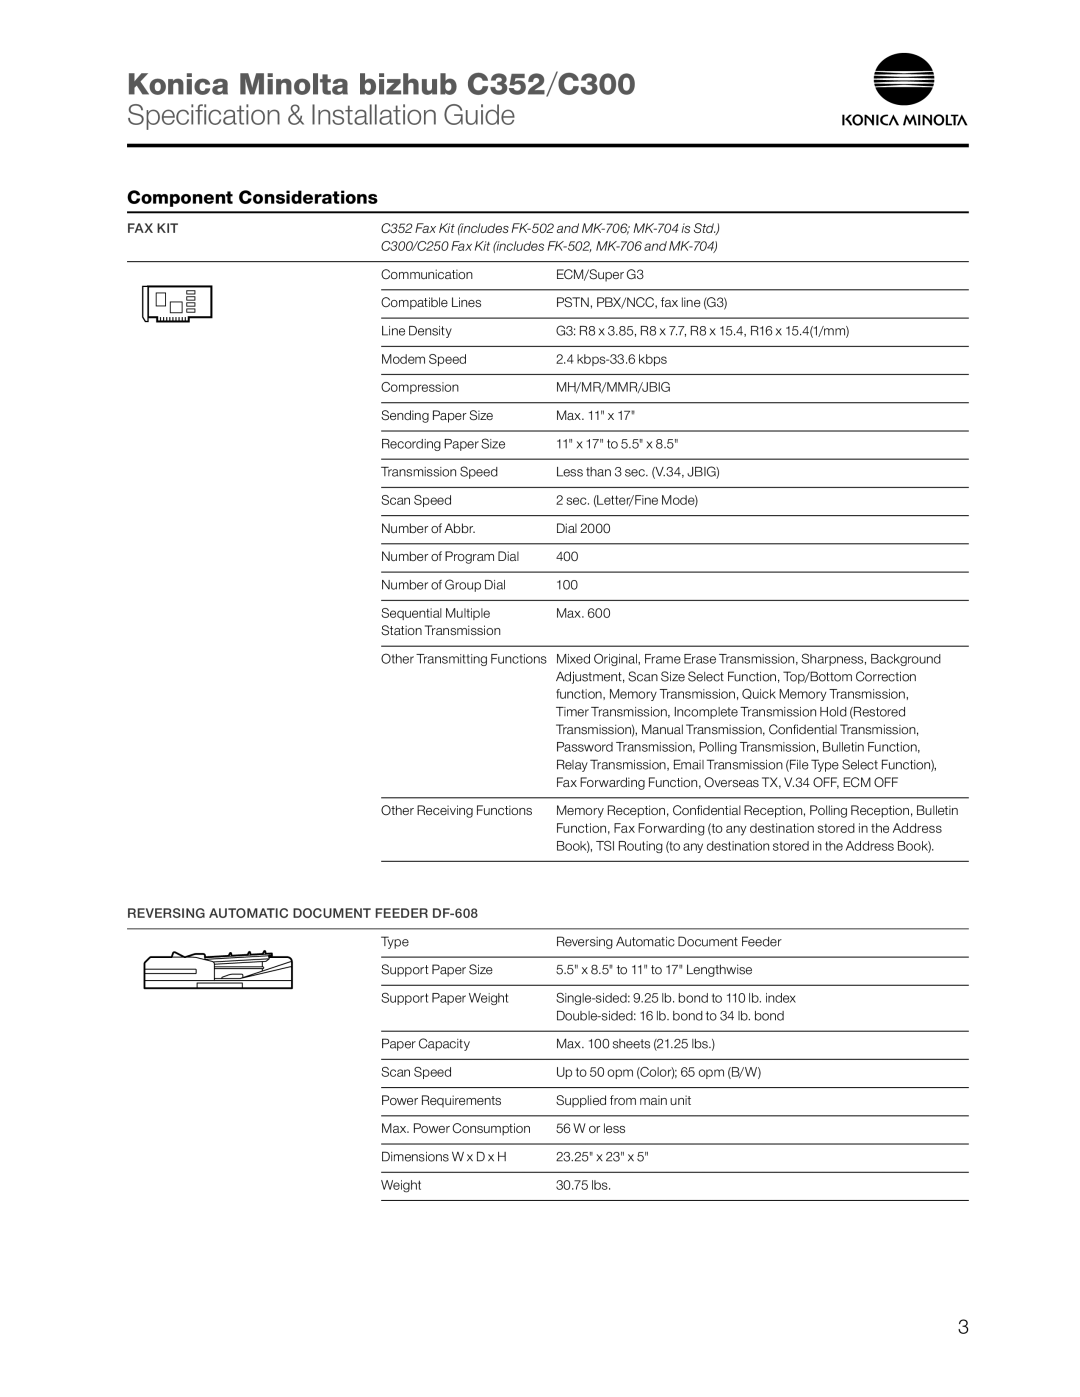 Konica Minolta Component Considerations, Konica Minolta bizhub C352 C300, Specification & Installation Guide, Fax Kit 